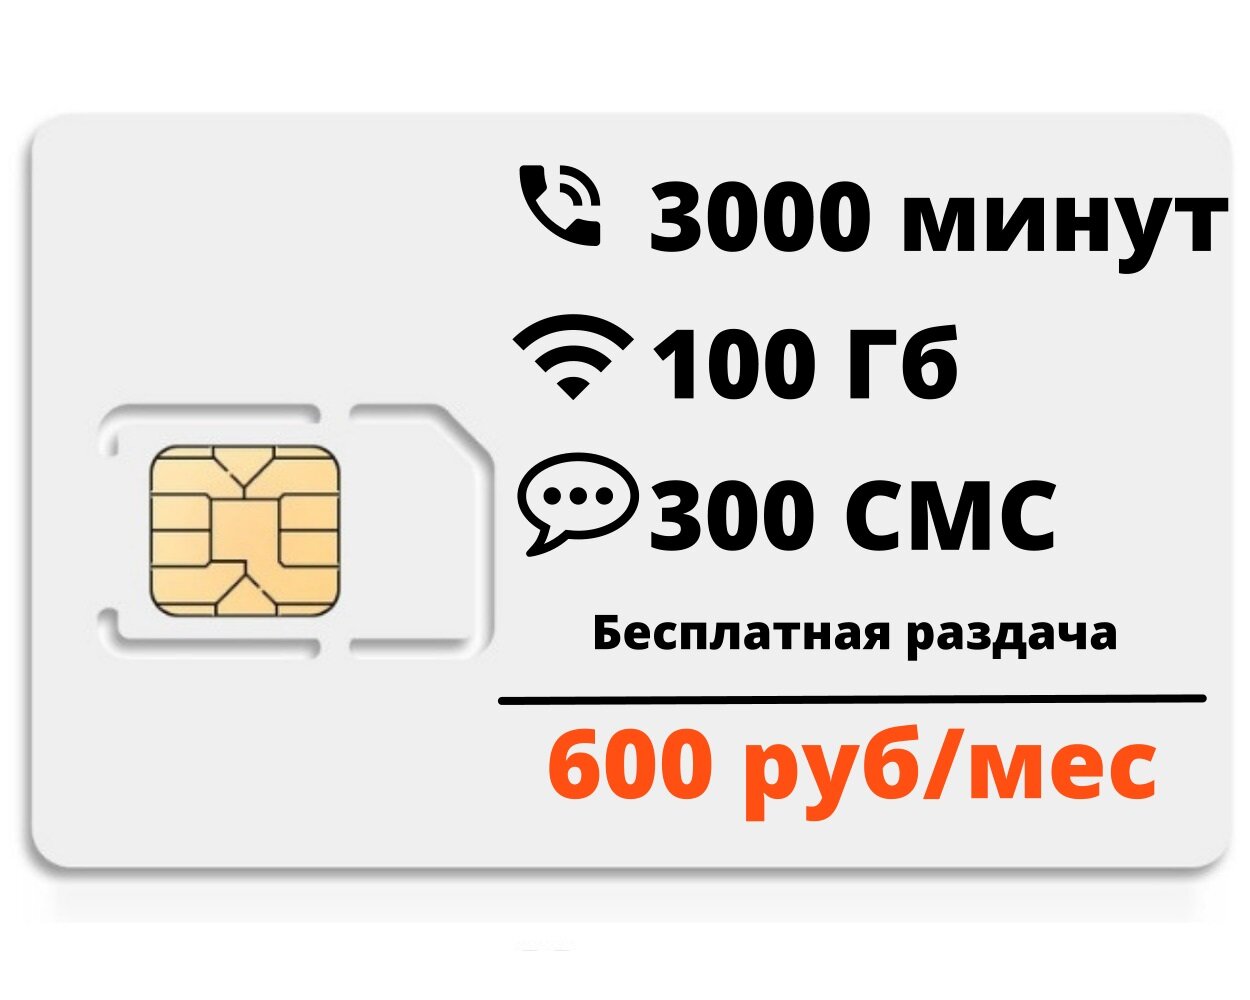 Сим-карта "Супер тариф" 3000мин/100гб, безлимит внутри сети, бесплатная раздача